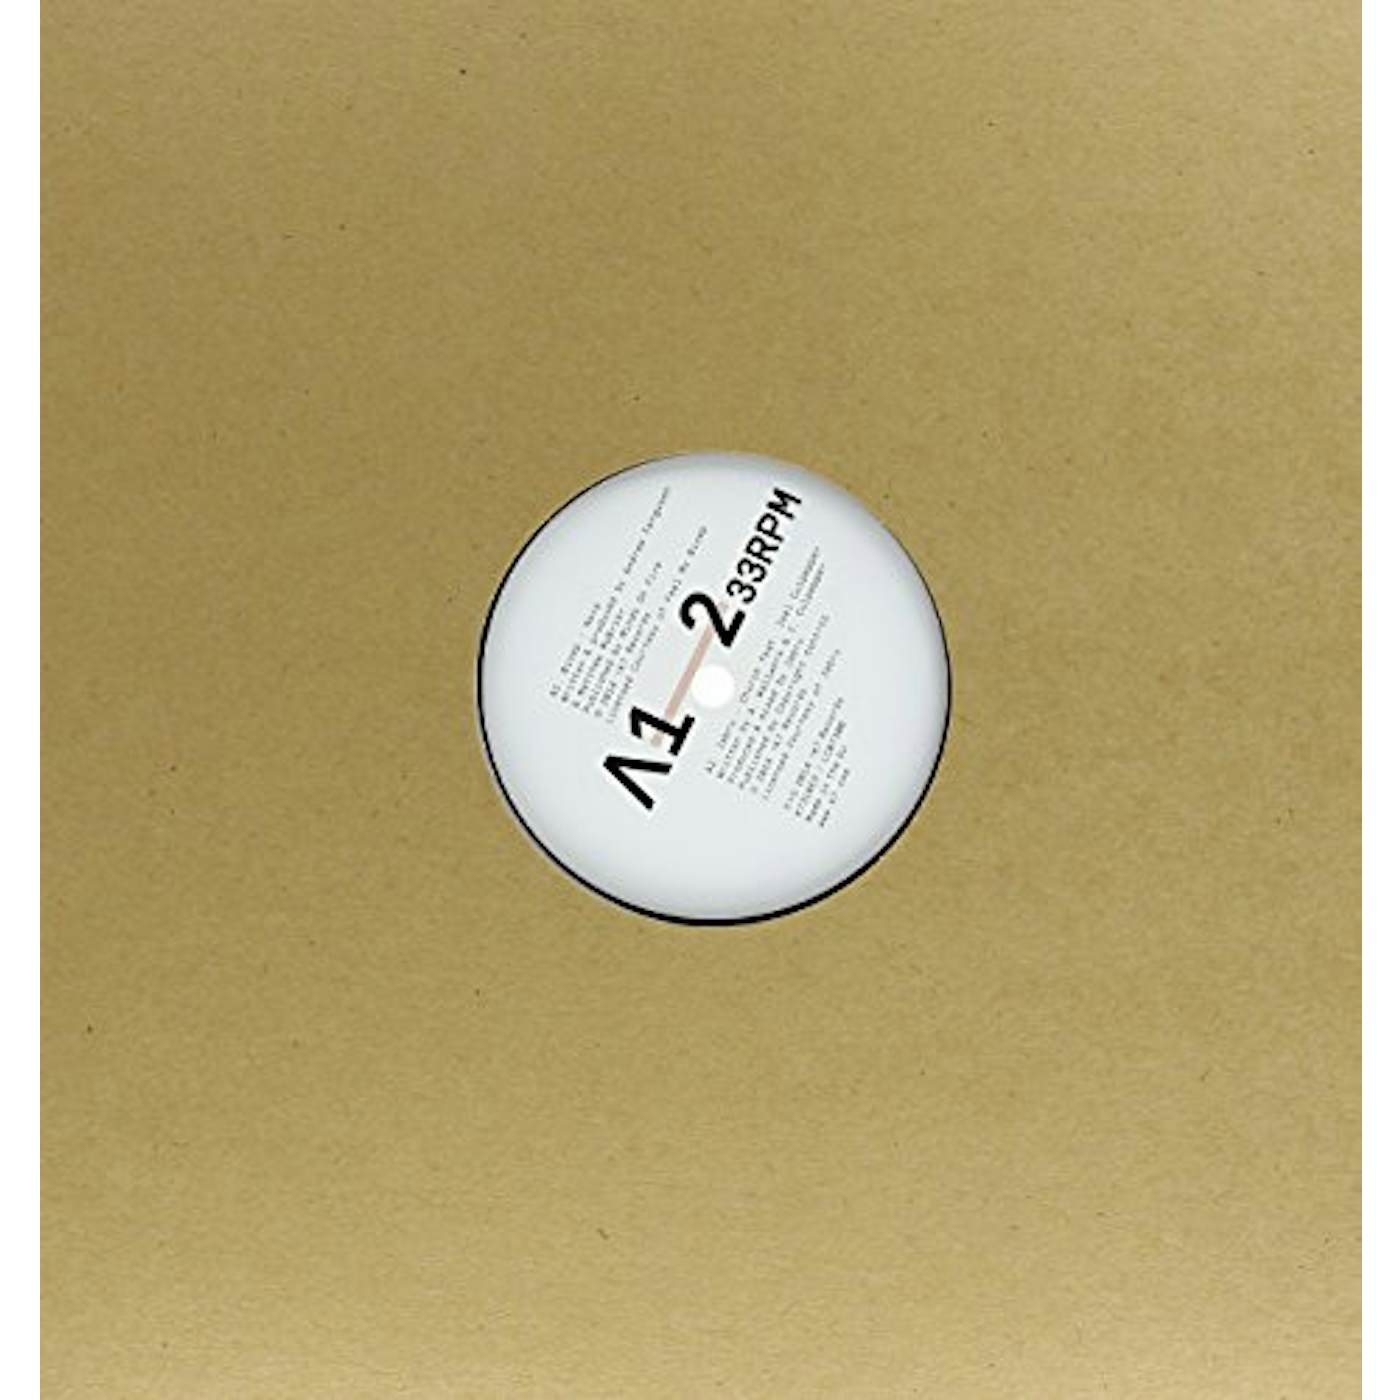 WILL SAUL DJ-KICKS EP / VARIOUS Vinyl Record - UK Release